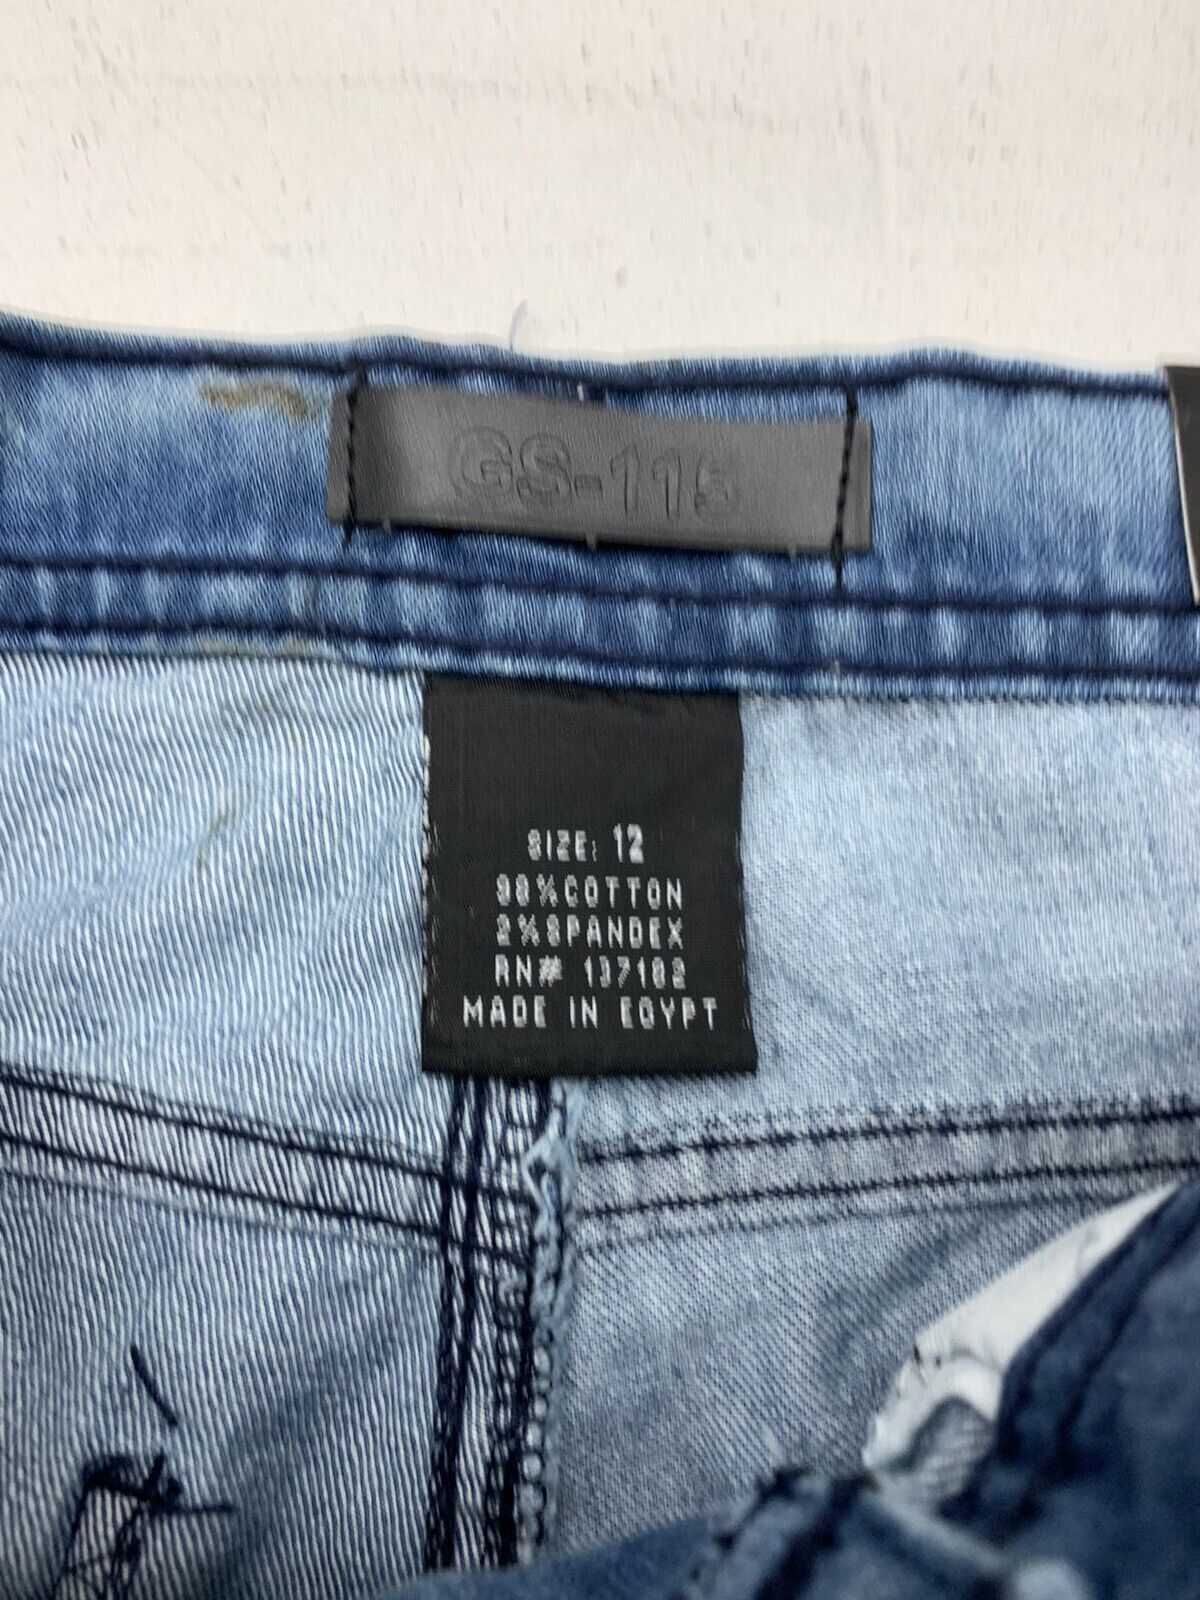 Gs-115 Womens Blue Denim Jeans Size 12 - beyond exchange